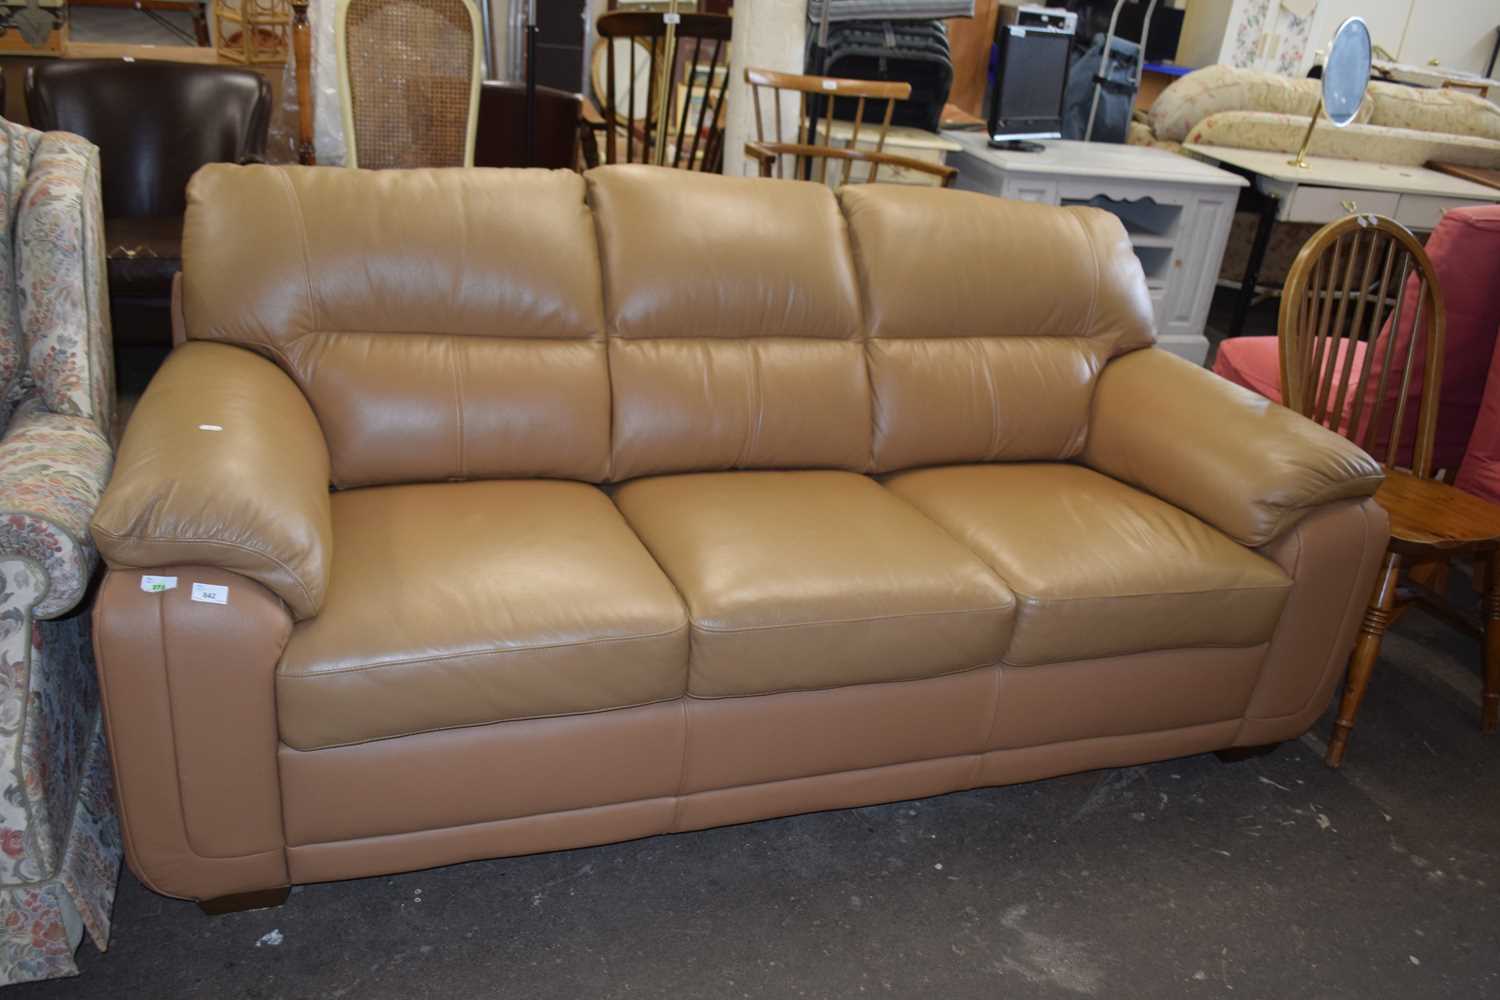 Brown leather three seater sofa